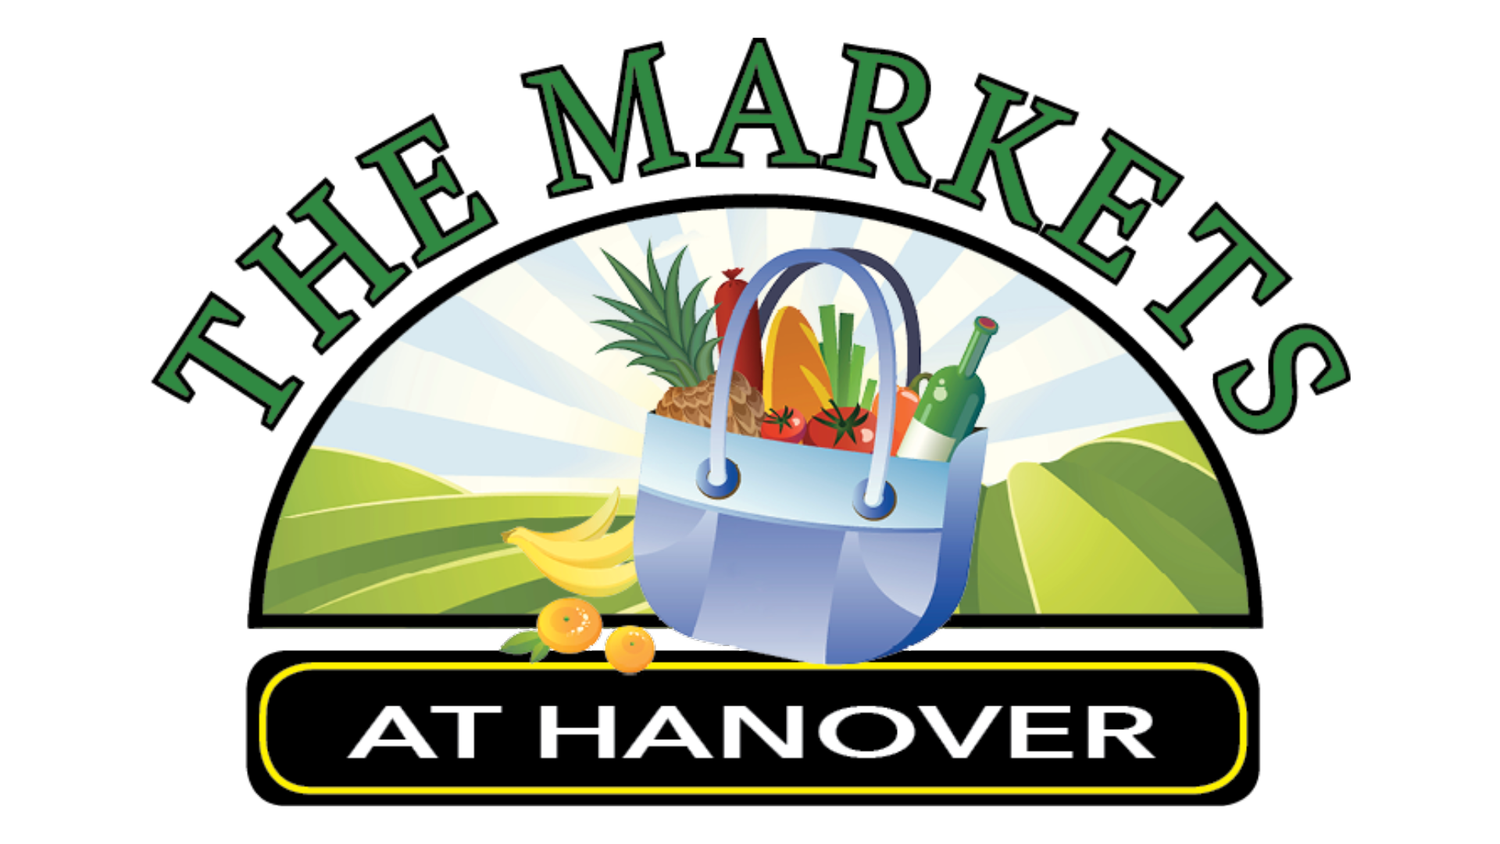 MARKETS AT HANOVER logo